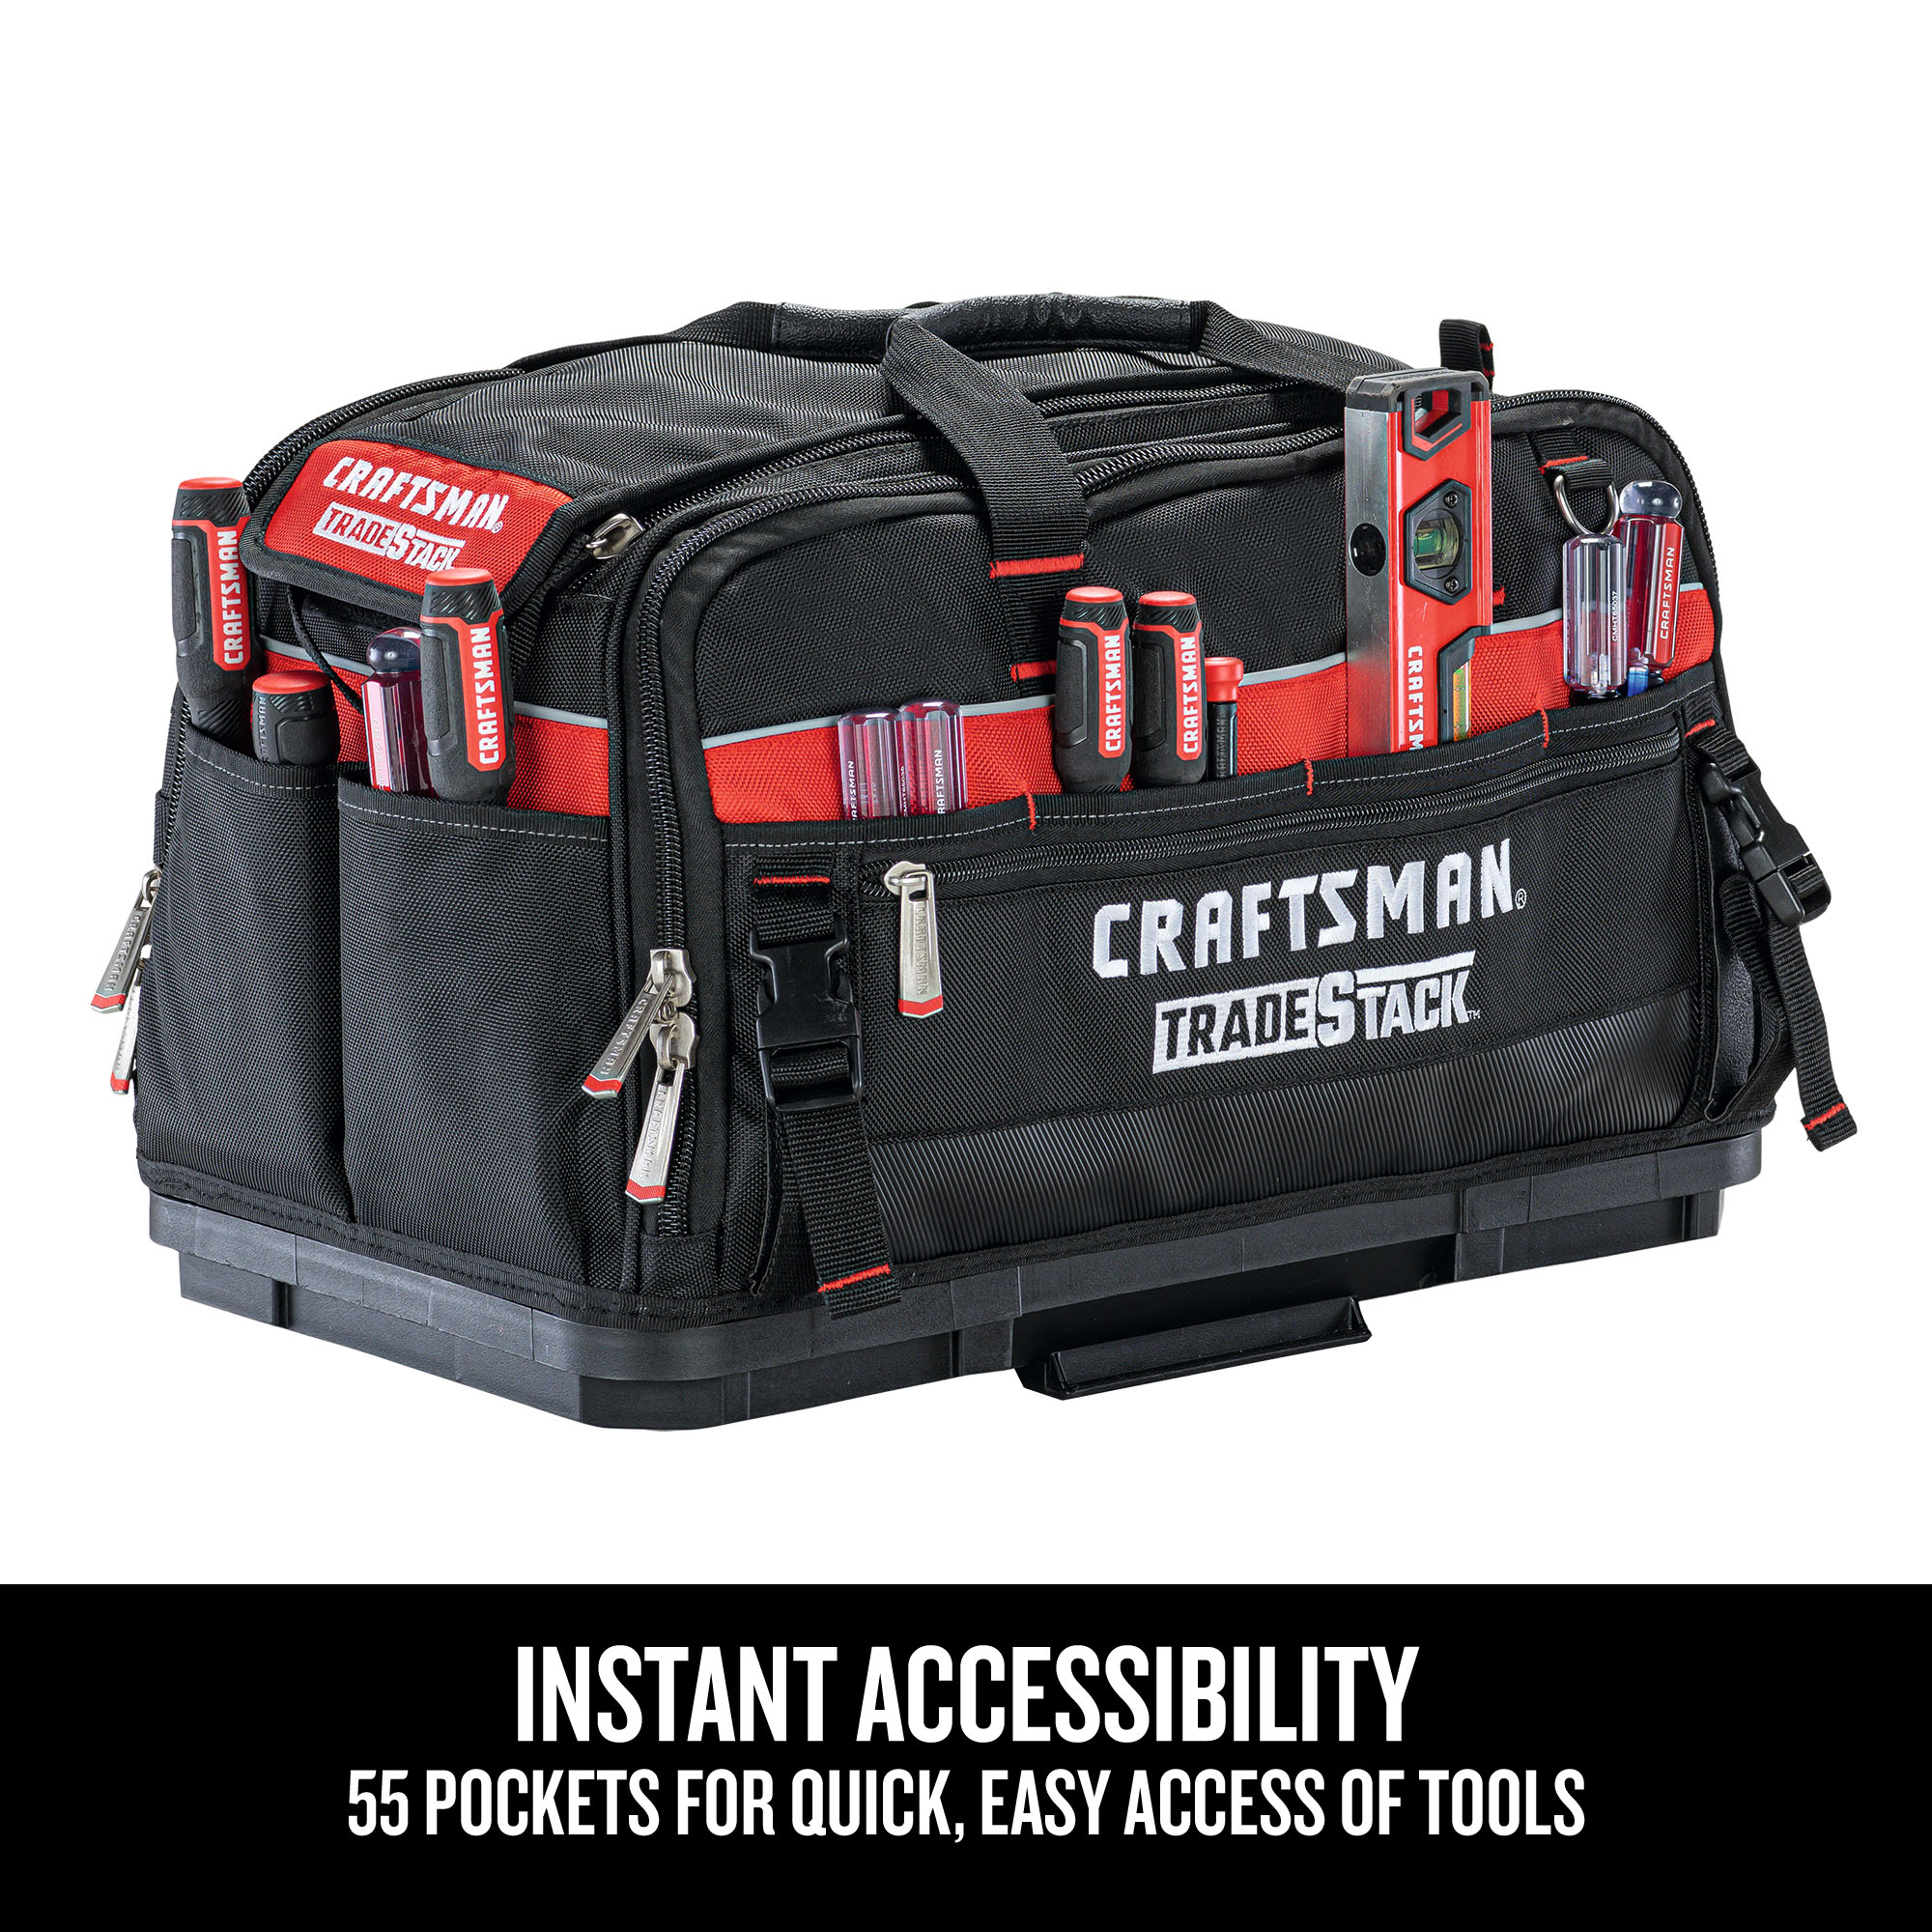 Craftsman Tradestack 22.5" Multi Access Bag $65